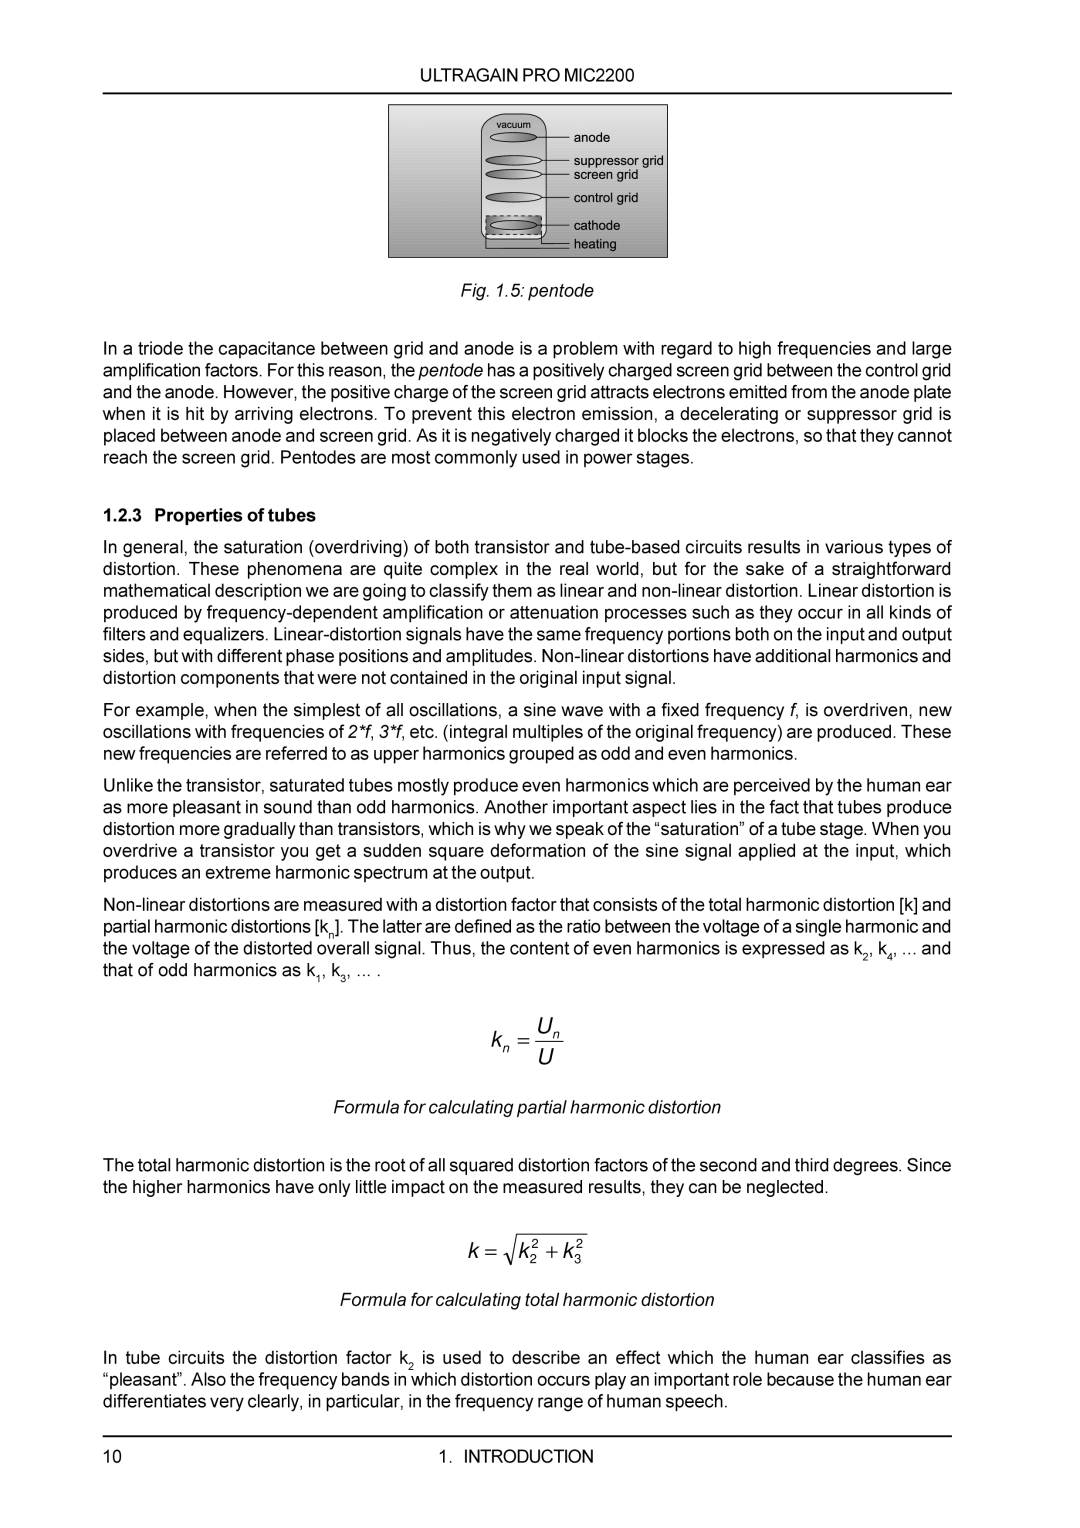 Behringer PROMIC2200 manual k= k22 + k32, 5 pentode, Formula for calculating total harmonic distortion 